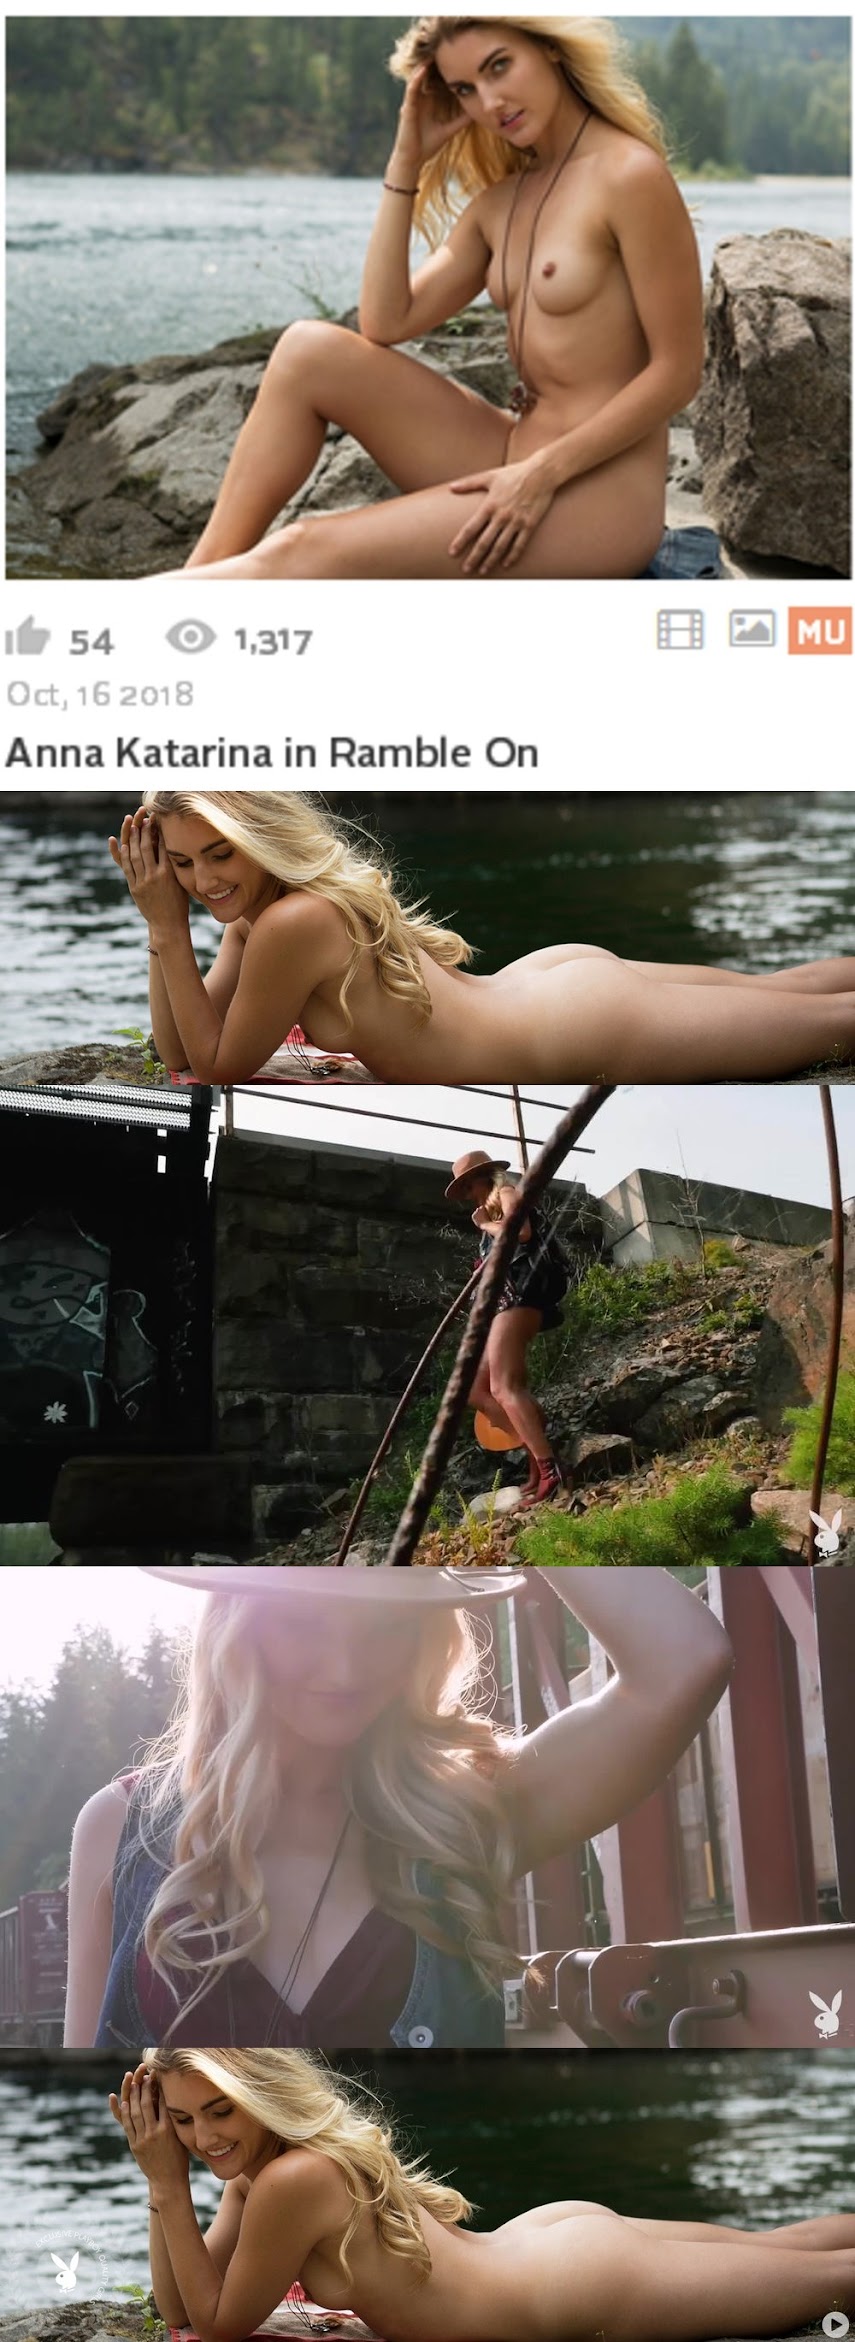 PlayboyPlus2018-10-16_Anna_Katerina_in_Ramble_On.rar-jk- Playboy PlayboyPlus2018-10-16 Anna Katerina in Ramble On